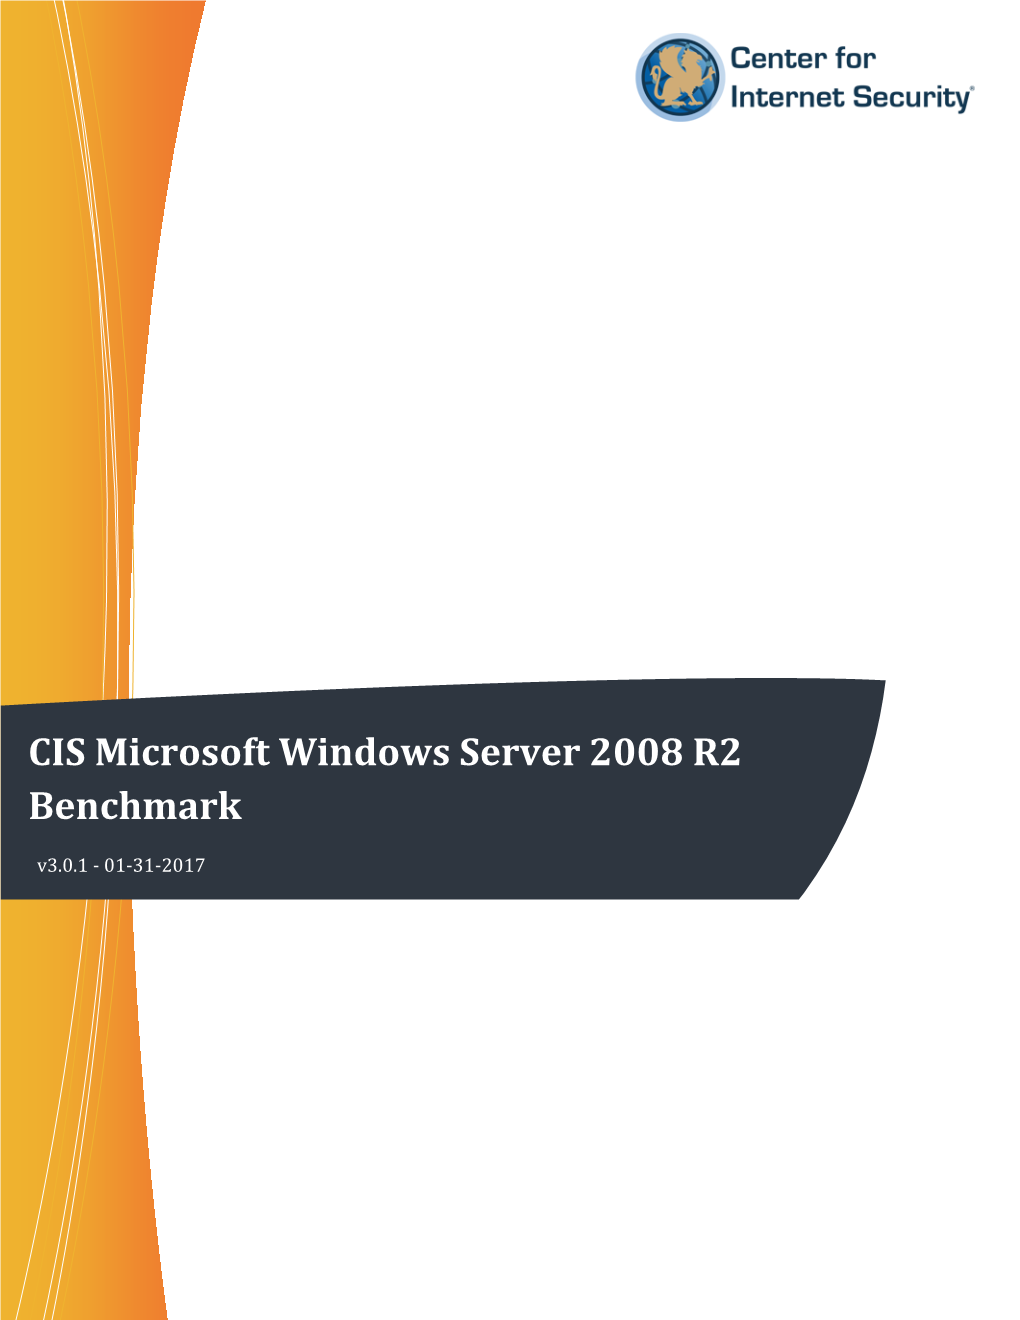 CIS Microsoft Windows Server 2008 R2 Benchmark